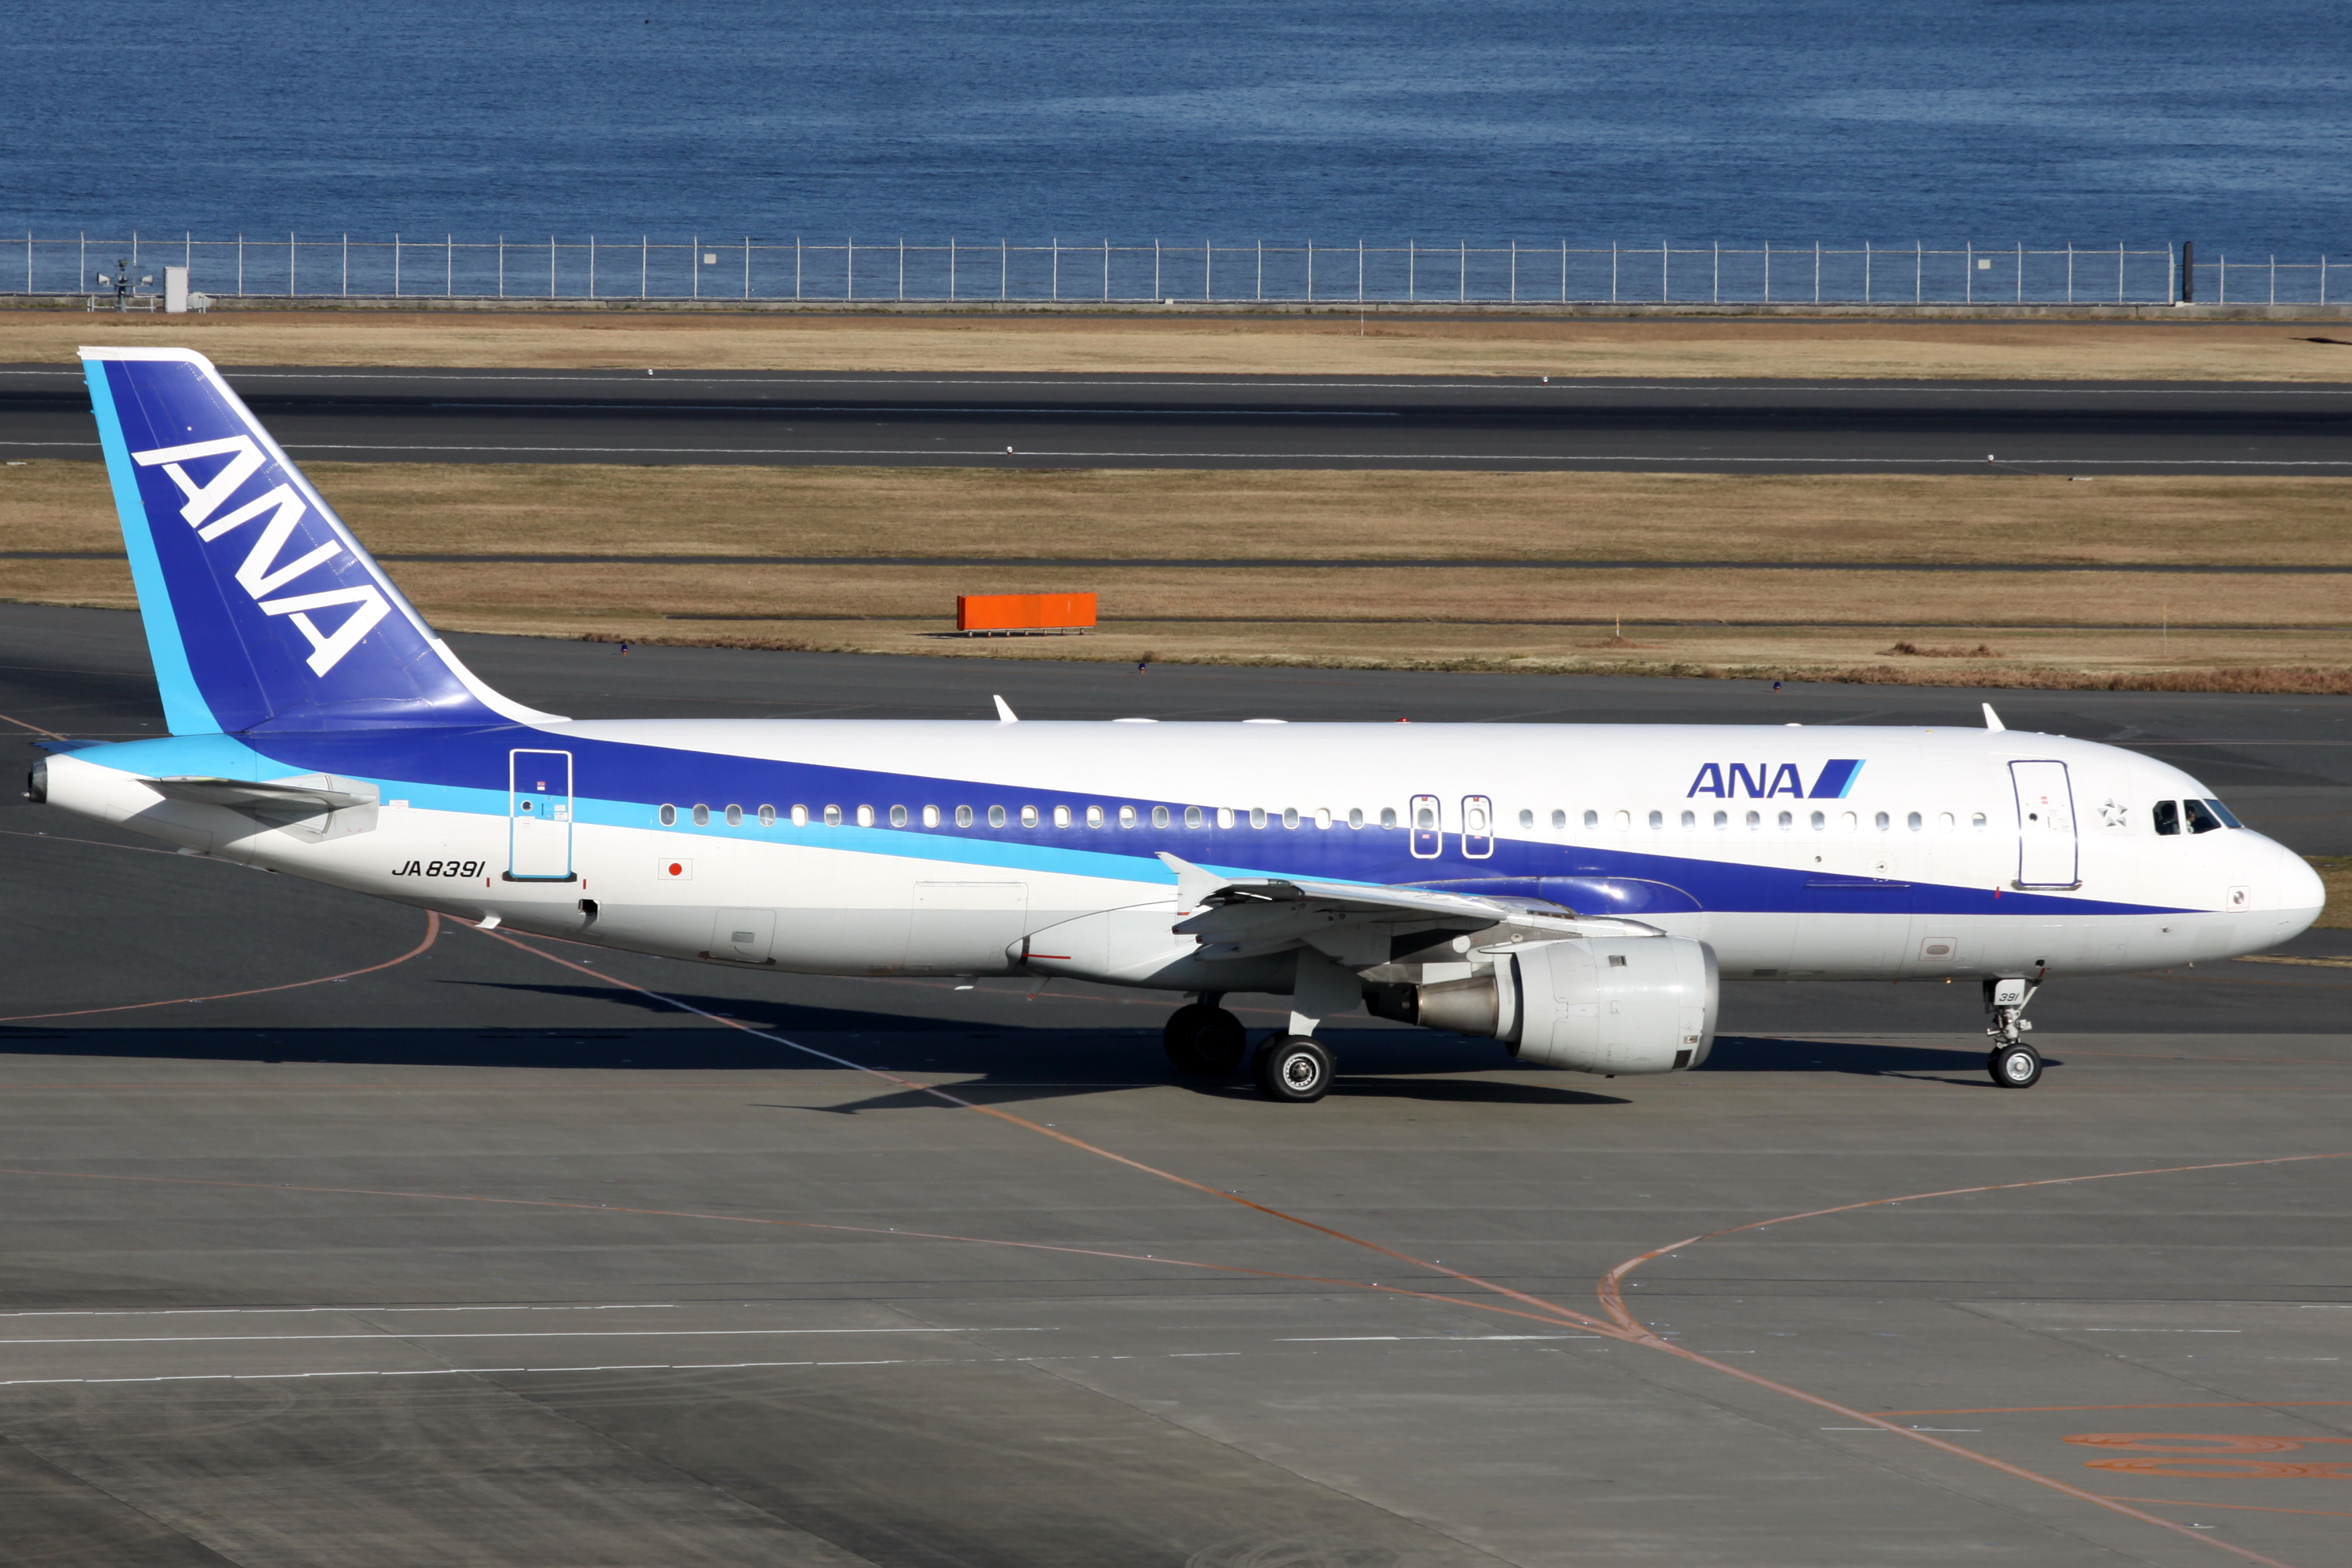 File:ANA A320-200(JA8391) (5335795450).jpg - Wikimedia Commons